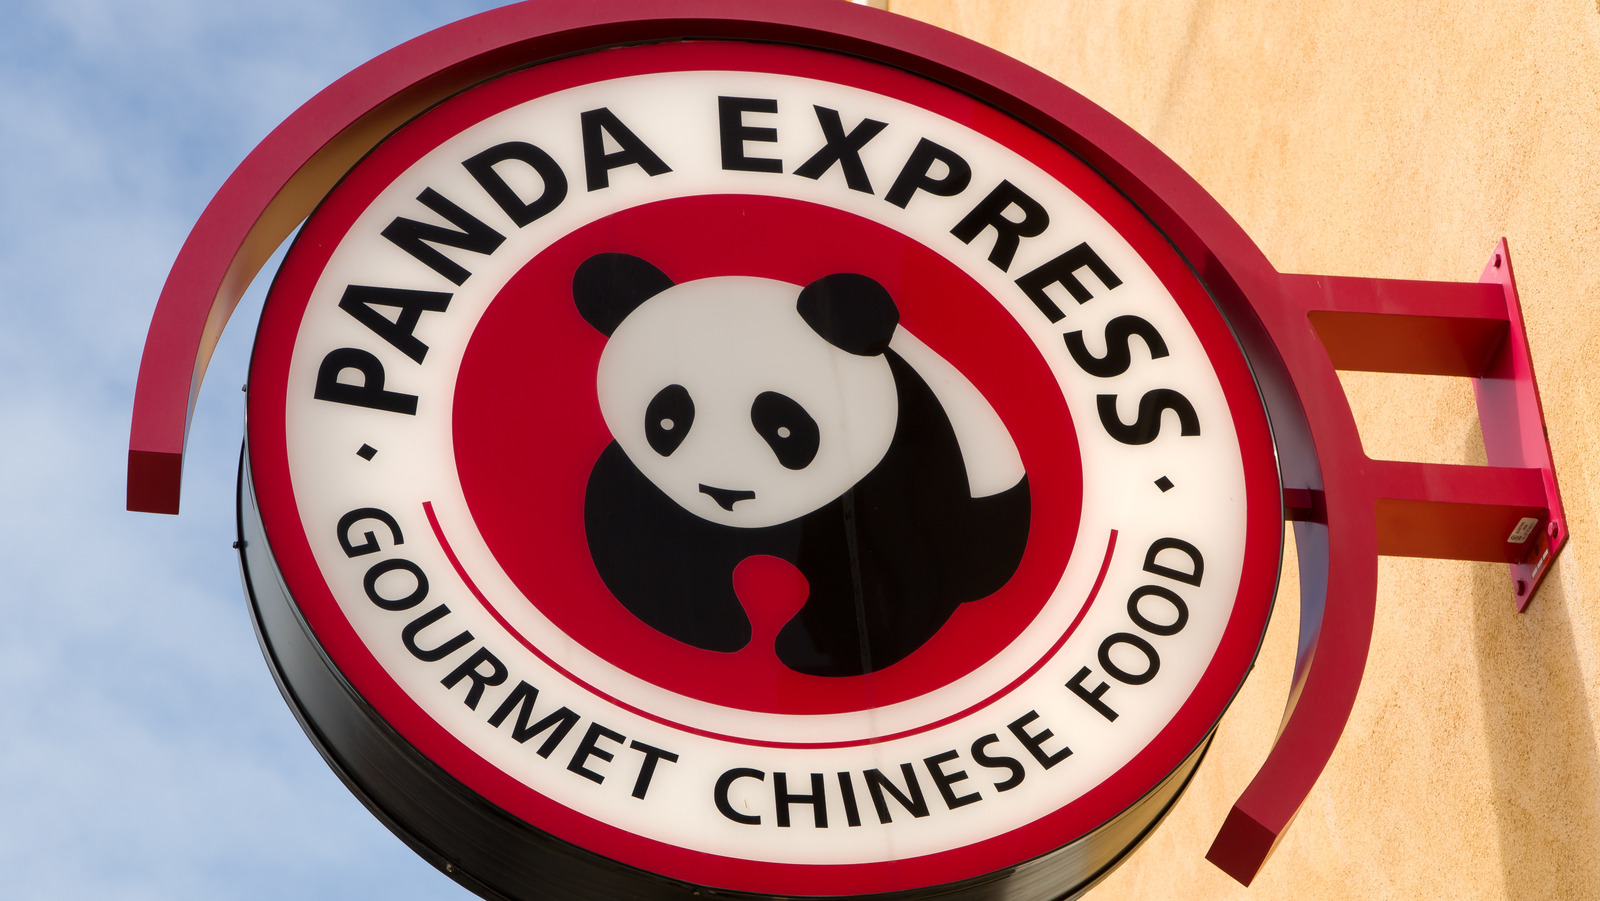 panda express menu catering